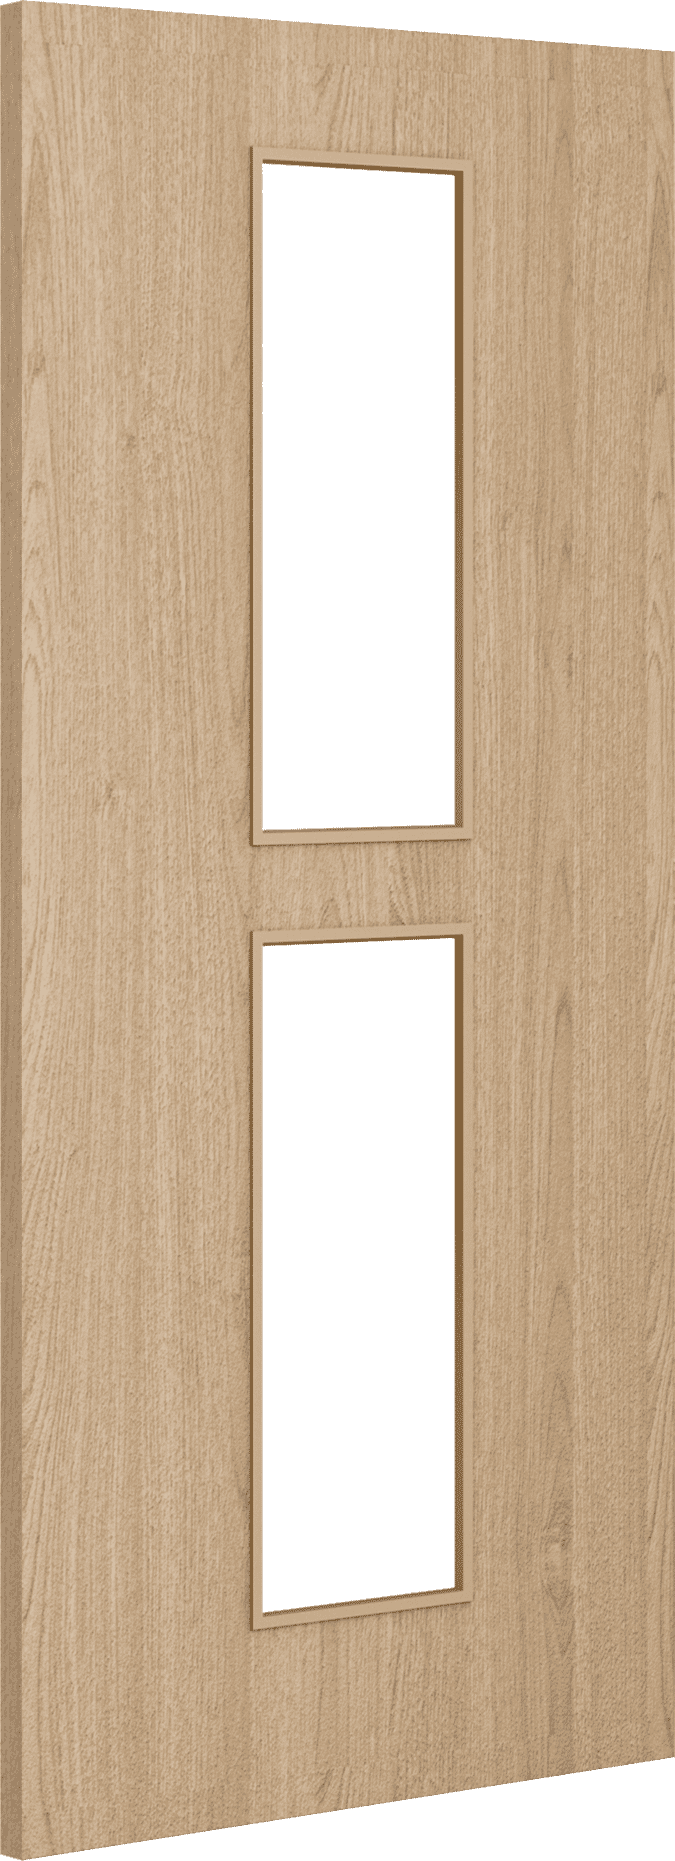 2040mm x 426mm x 44mm Architectural Oak 12 Frosted Glazed - Prefinished FD30 Fire Door Blank